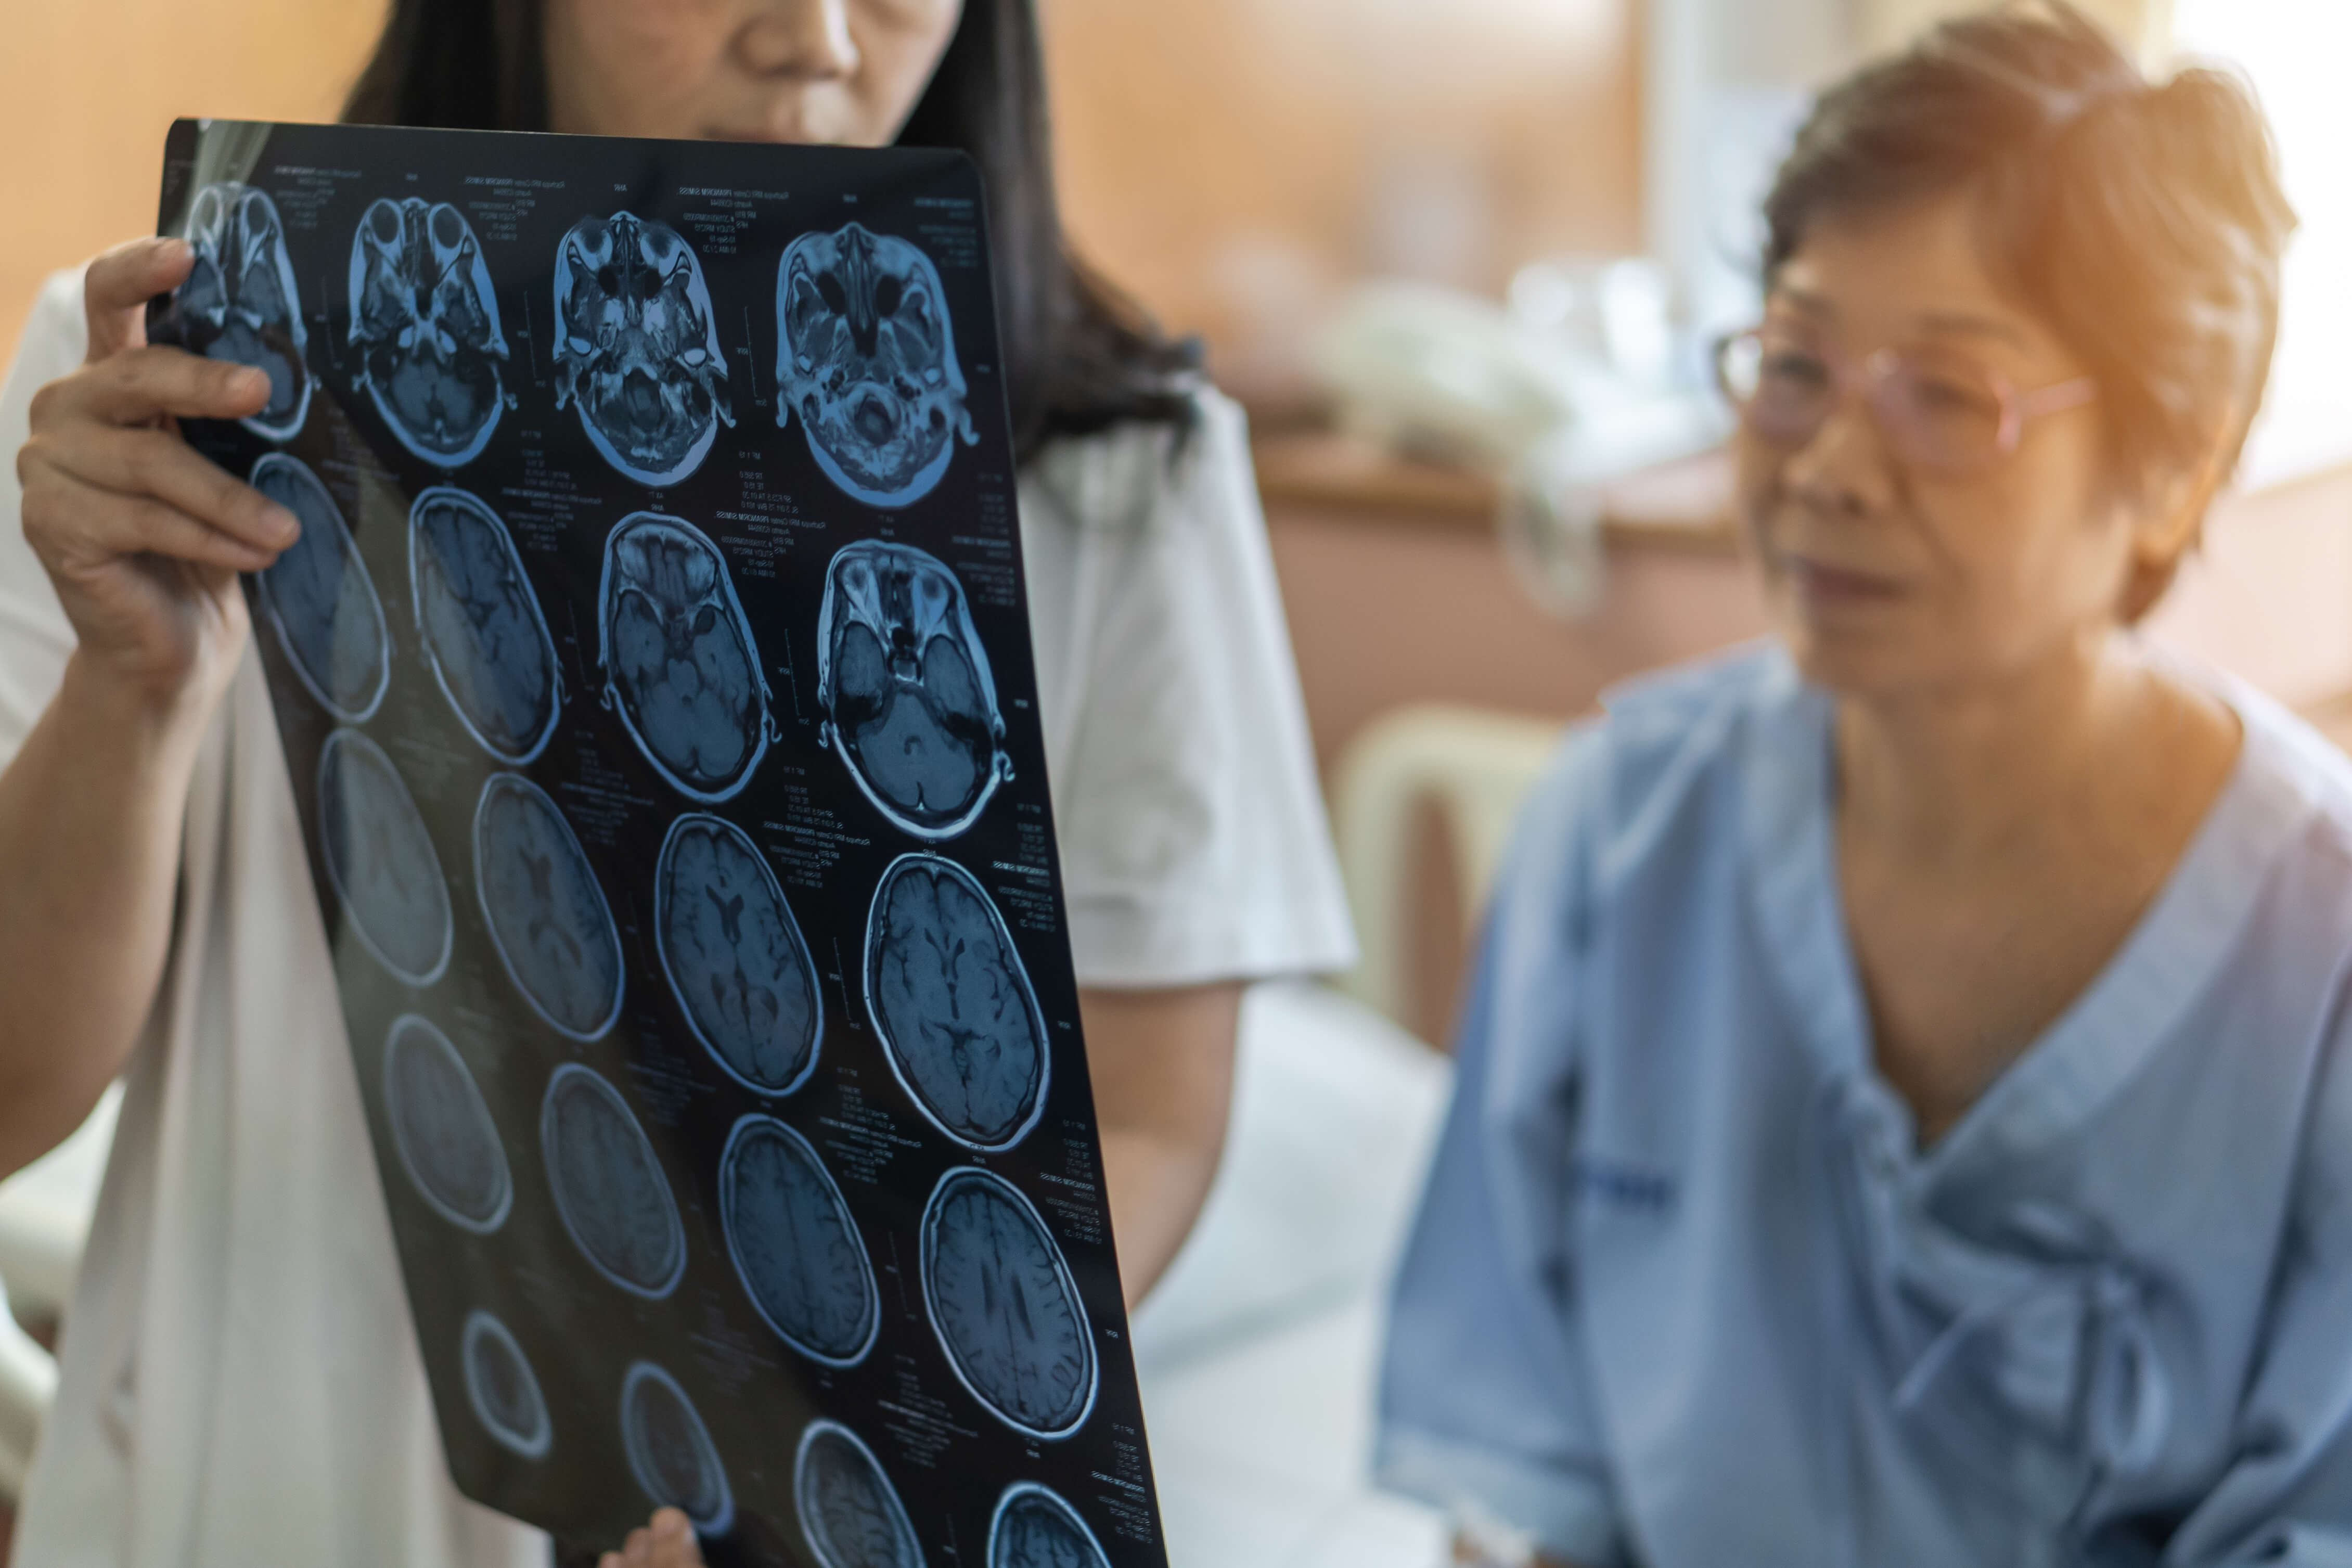 X-rays showing traumatic brain injury symptoms.